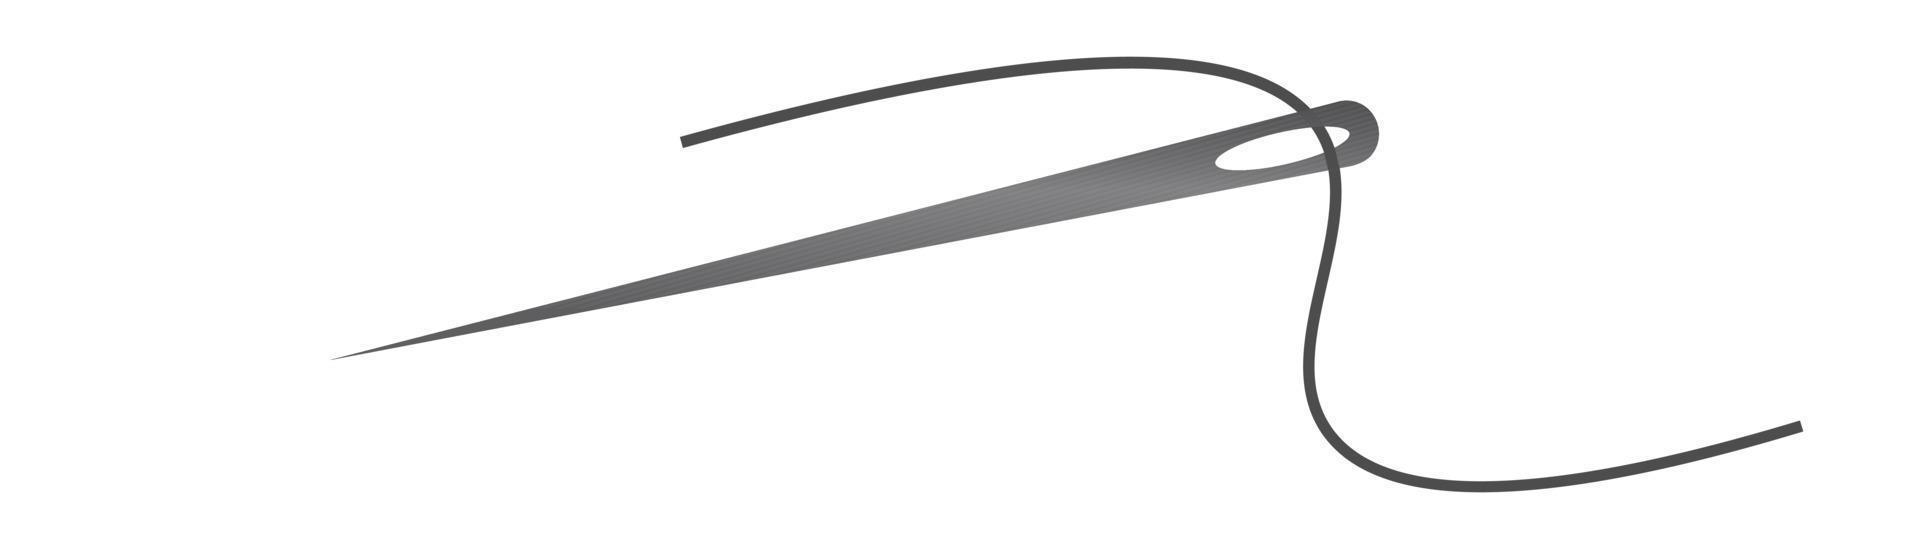 vector de icono de silueta de aguja e hilo. logotipo a medida con símbolo de aguja e hilo curvo, herramienta de costura a medida y zapatero, elemento de costura. aguja e hilo de color oscuro.